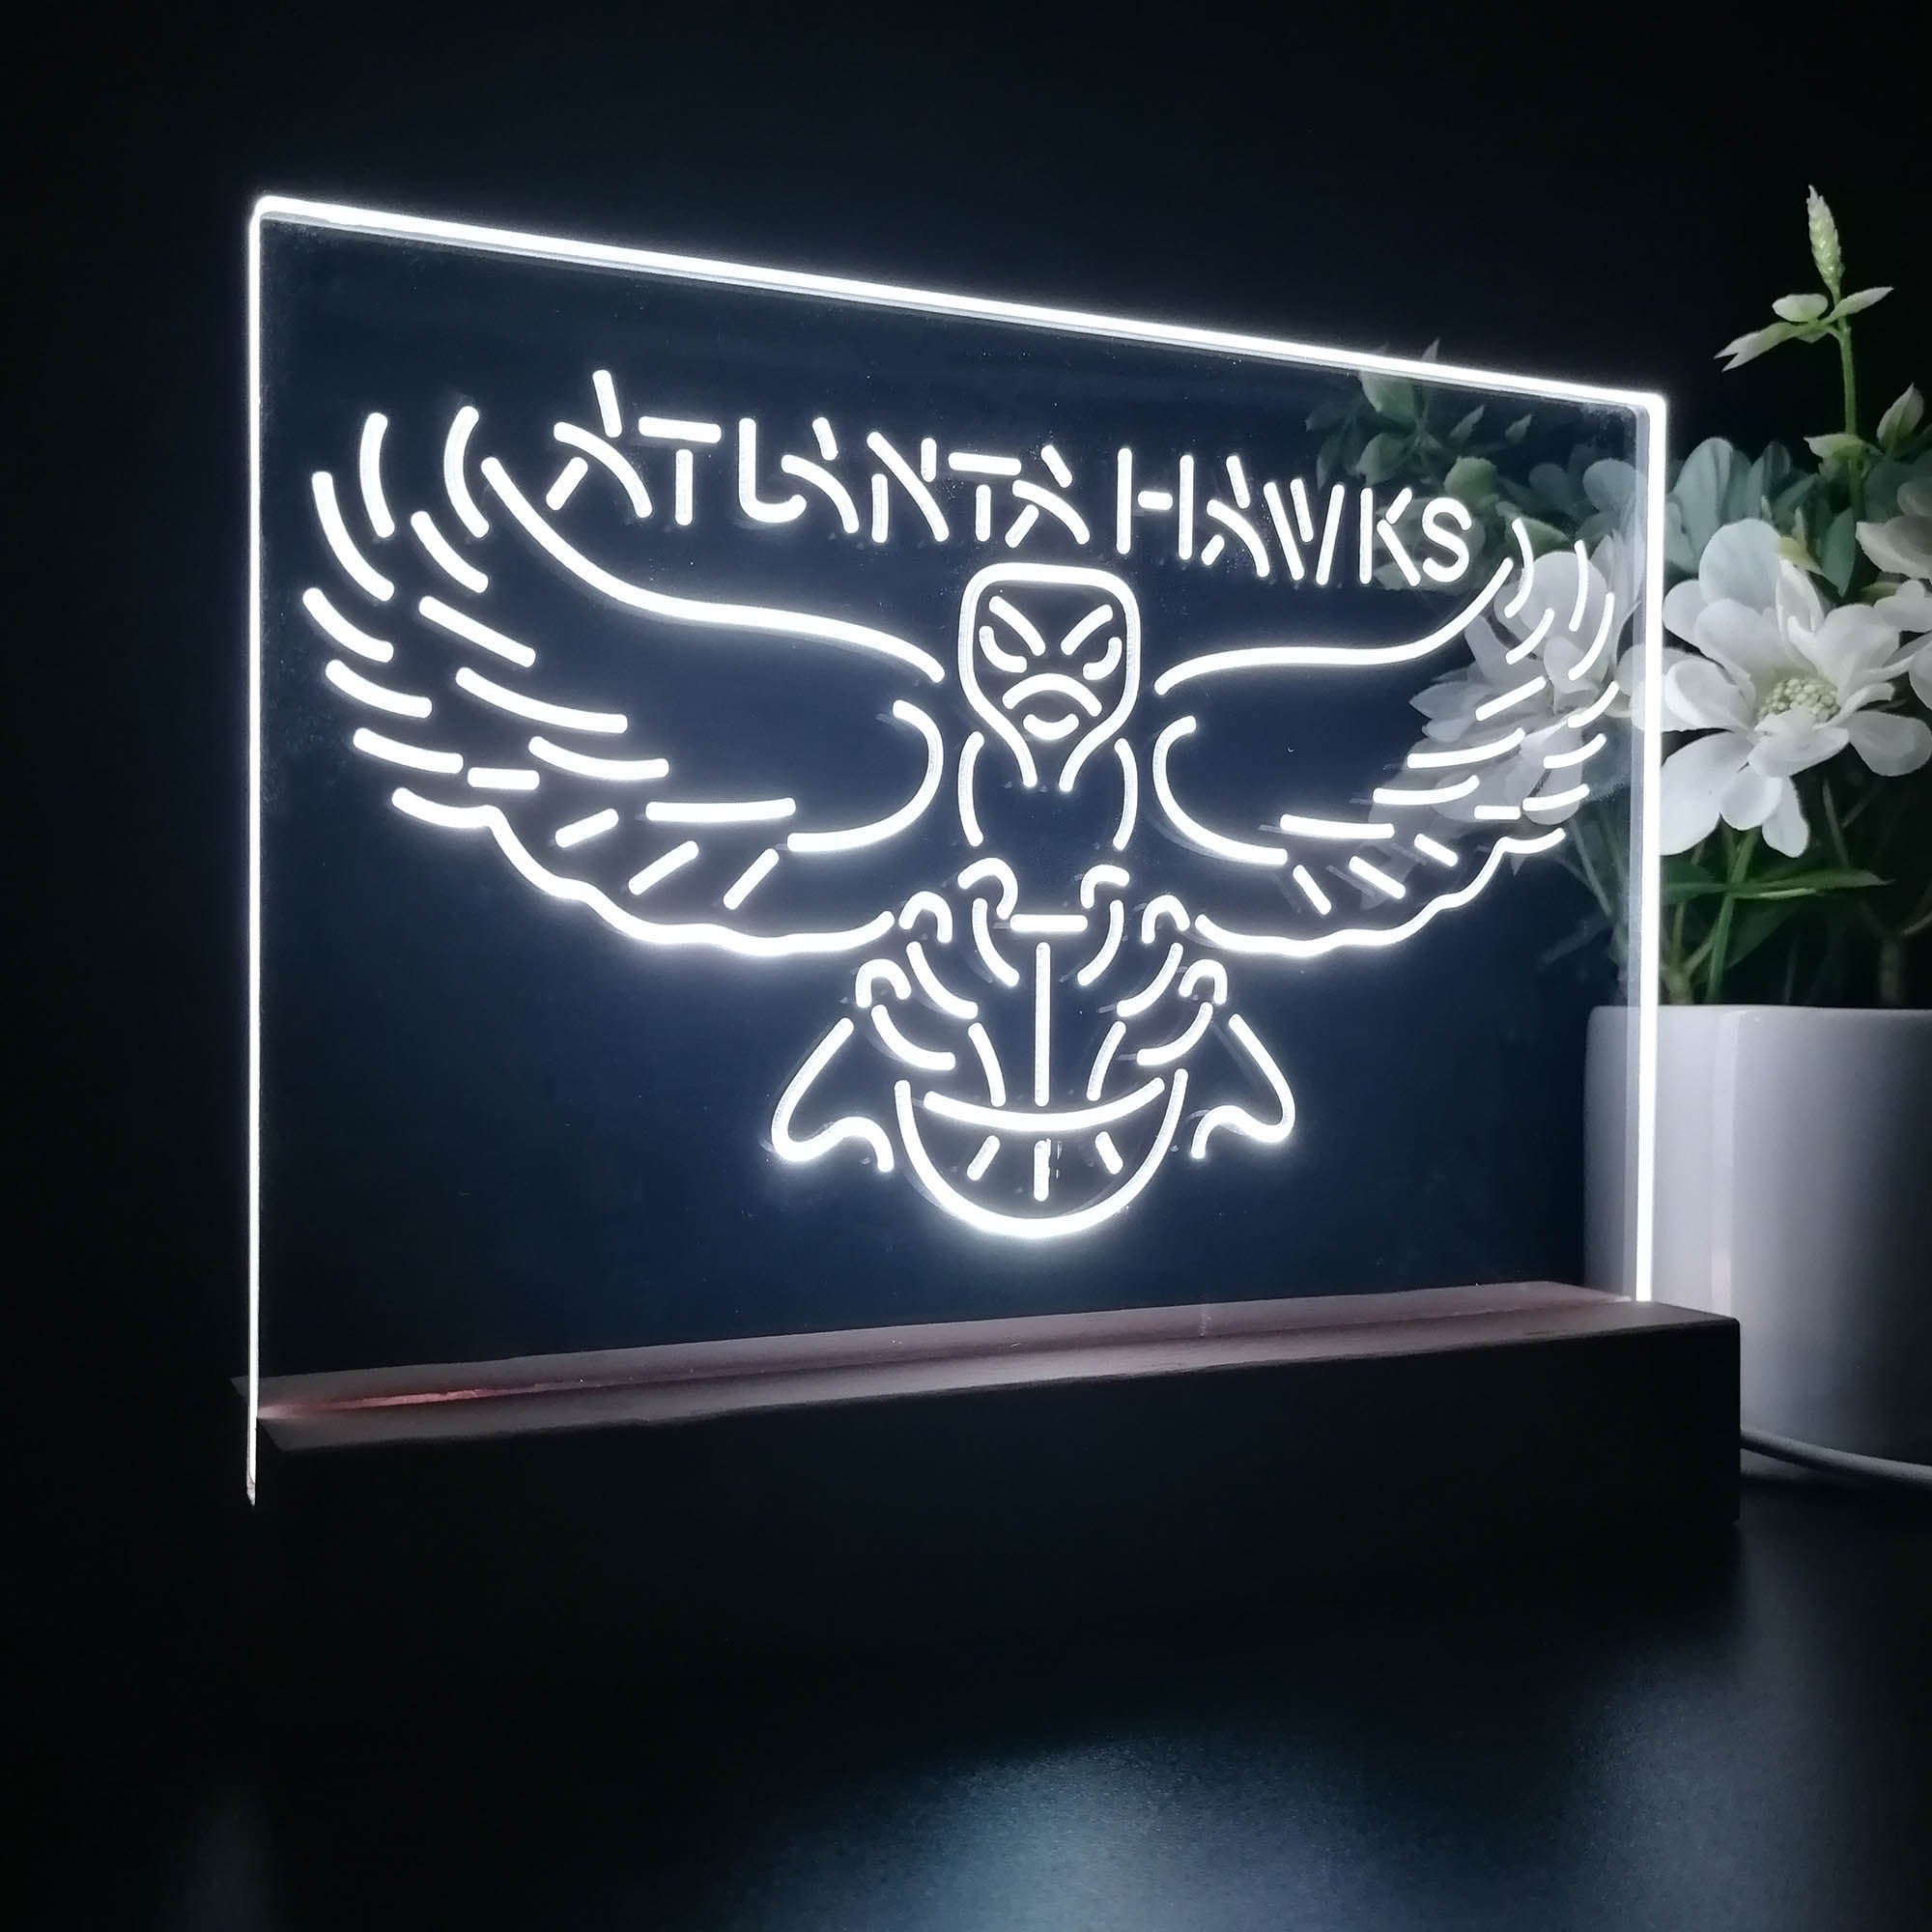 Atlanta Hawks Sport Team Night Lamp 3D Illusion Lamp